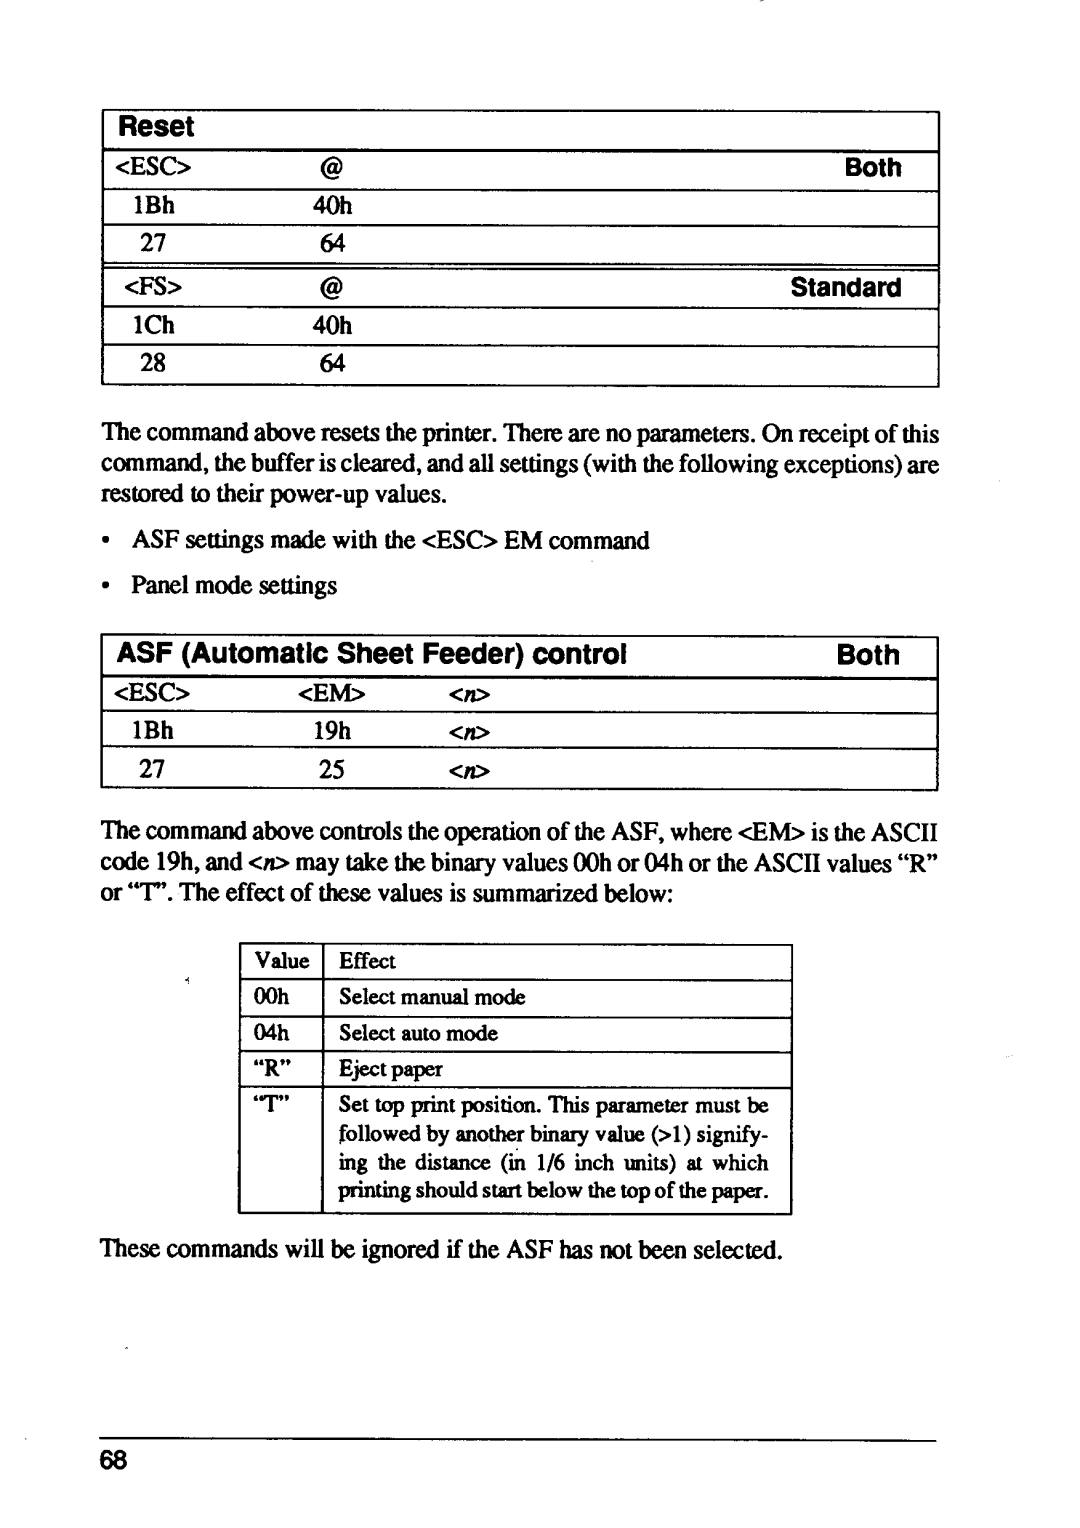 Star Micronics XB24-10, XB24-15 user manual Reset, ASF Automatic Sheet Feeder control, Both, Standard 